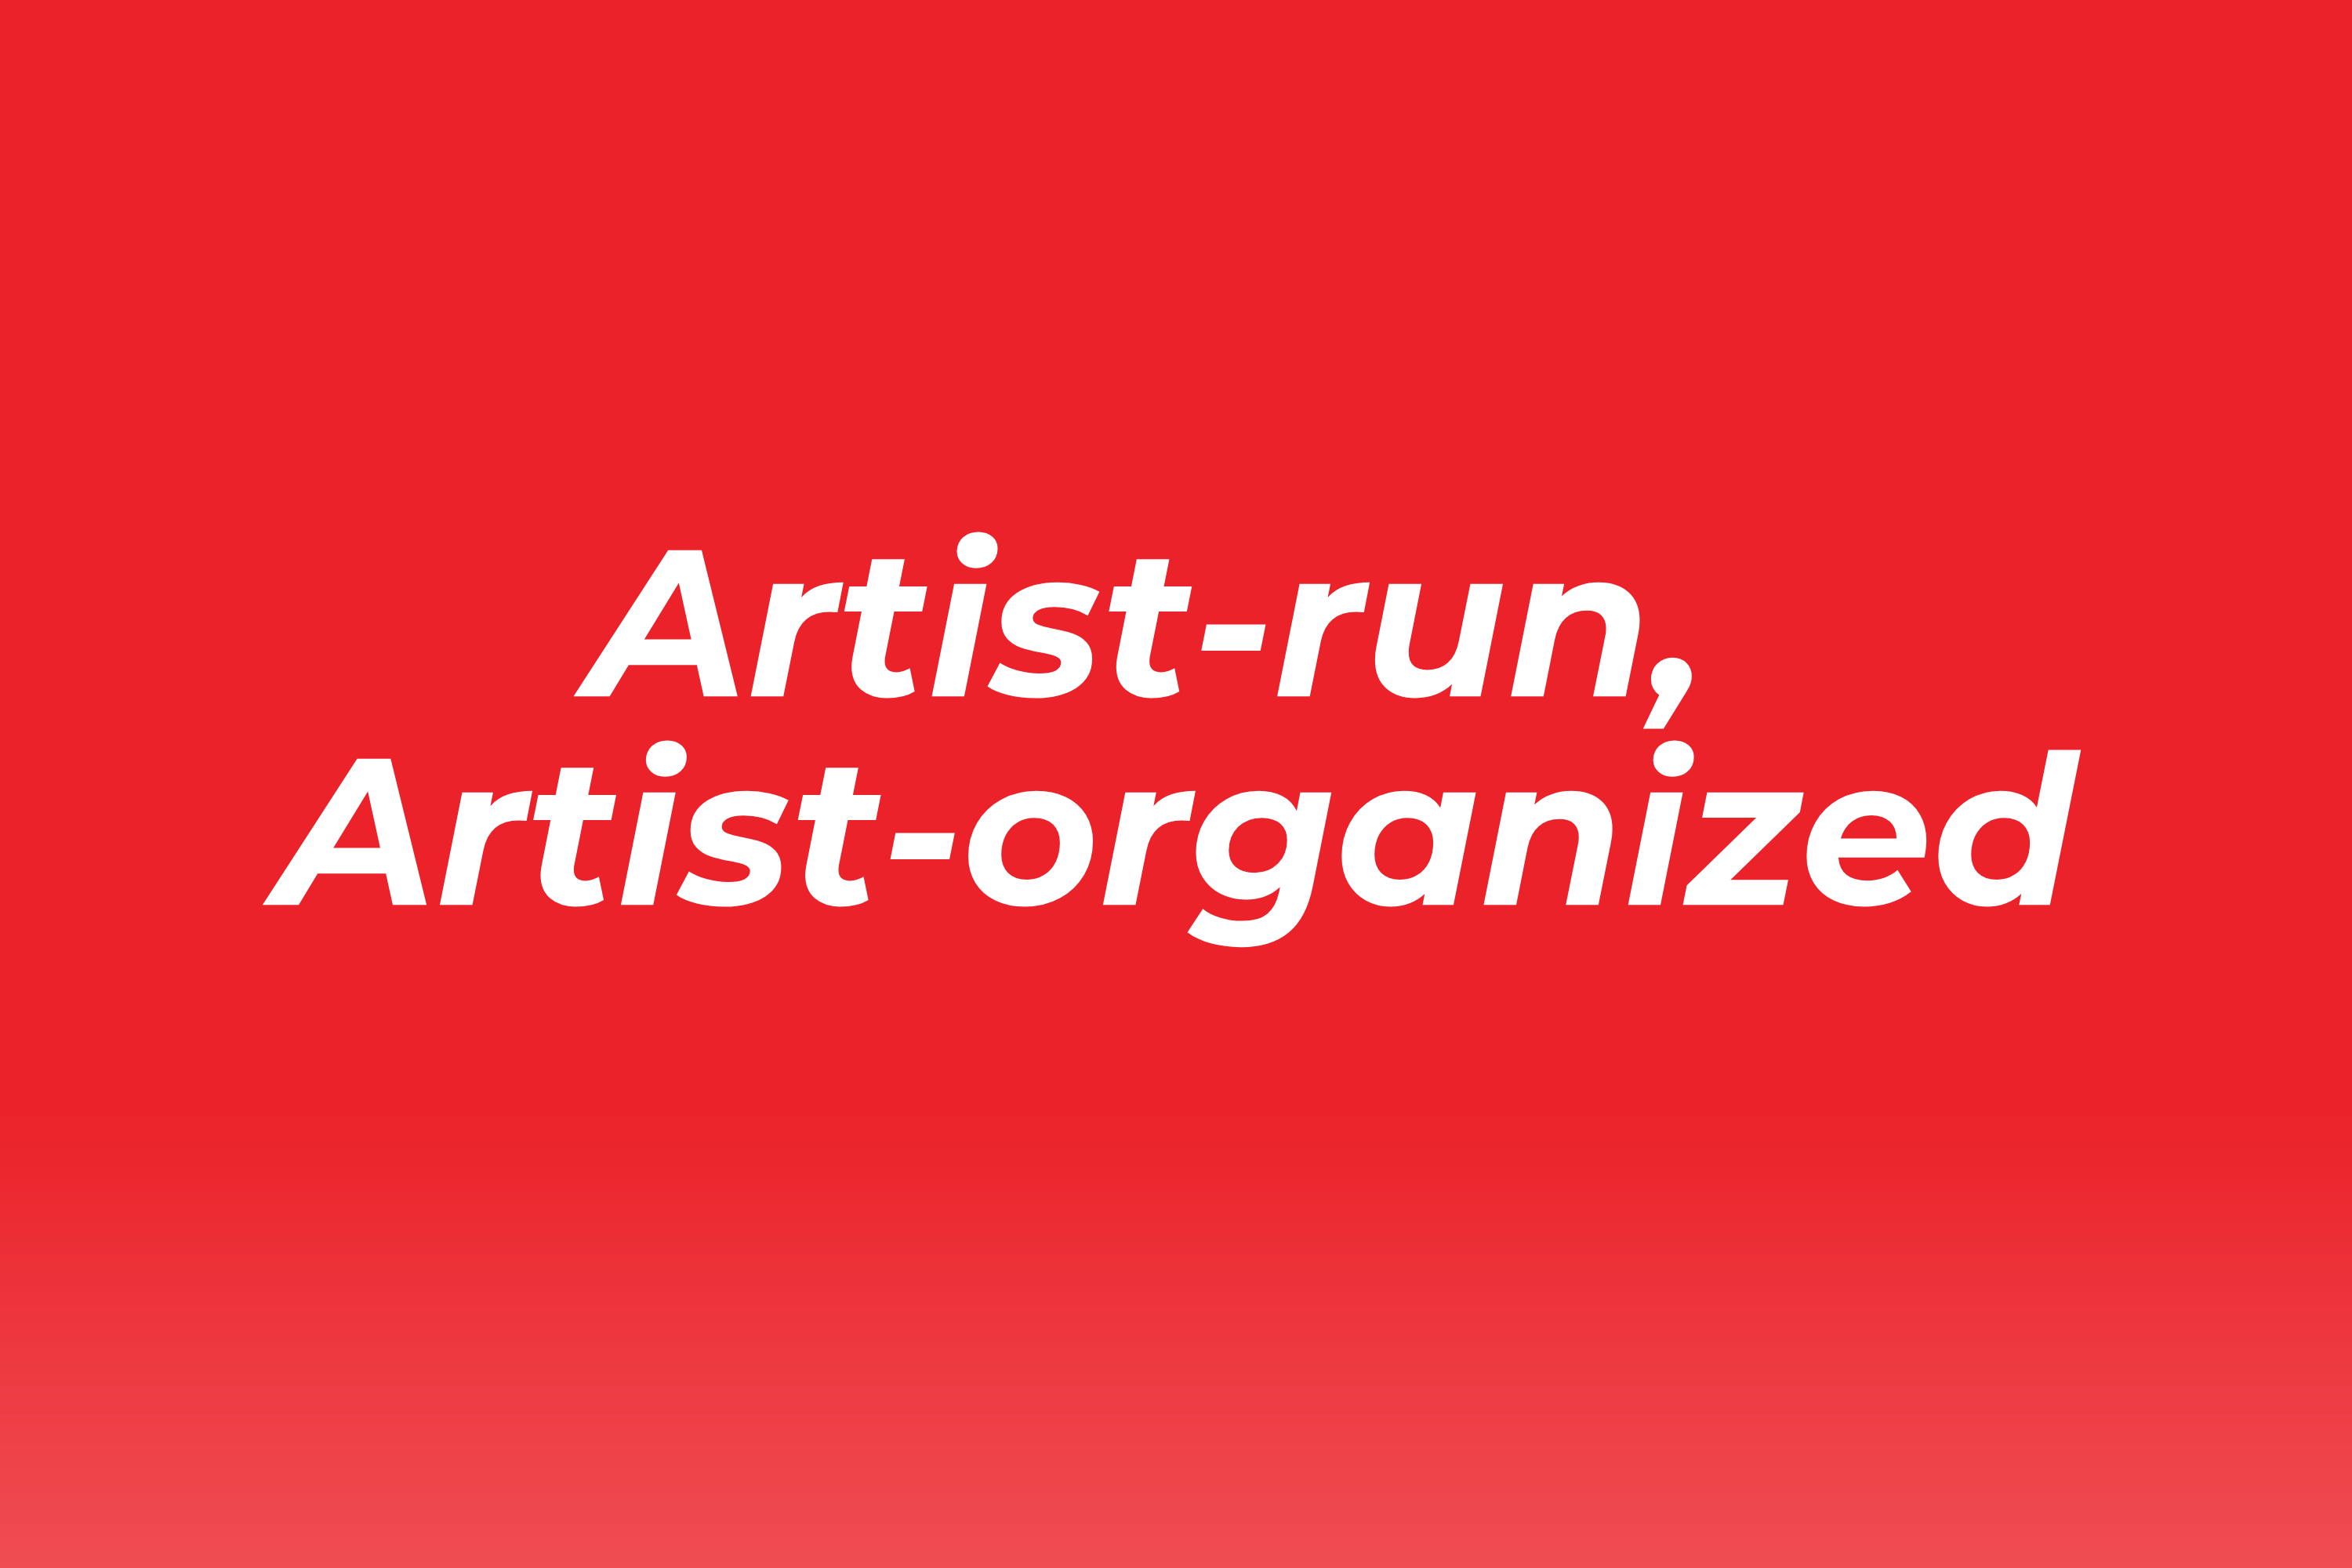 Artist-run, Artist-organized